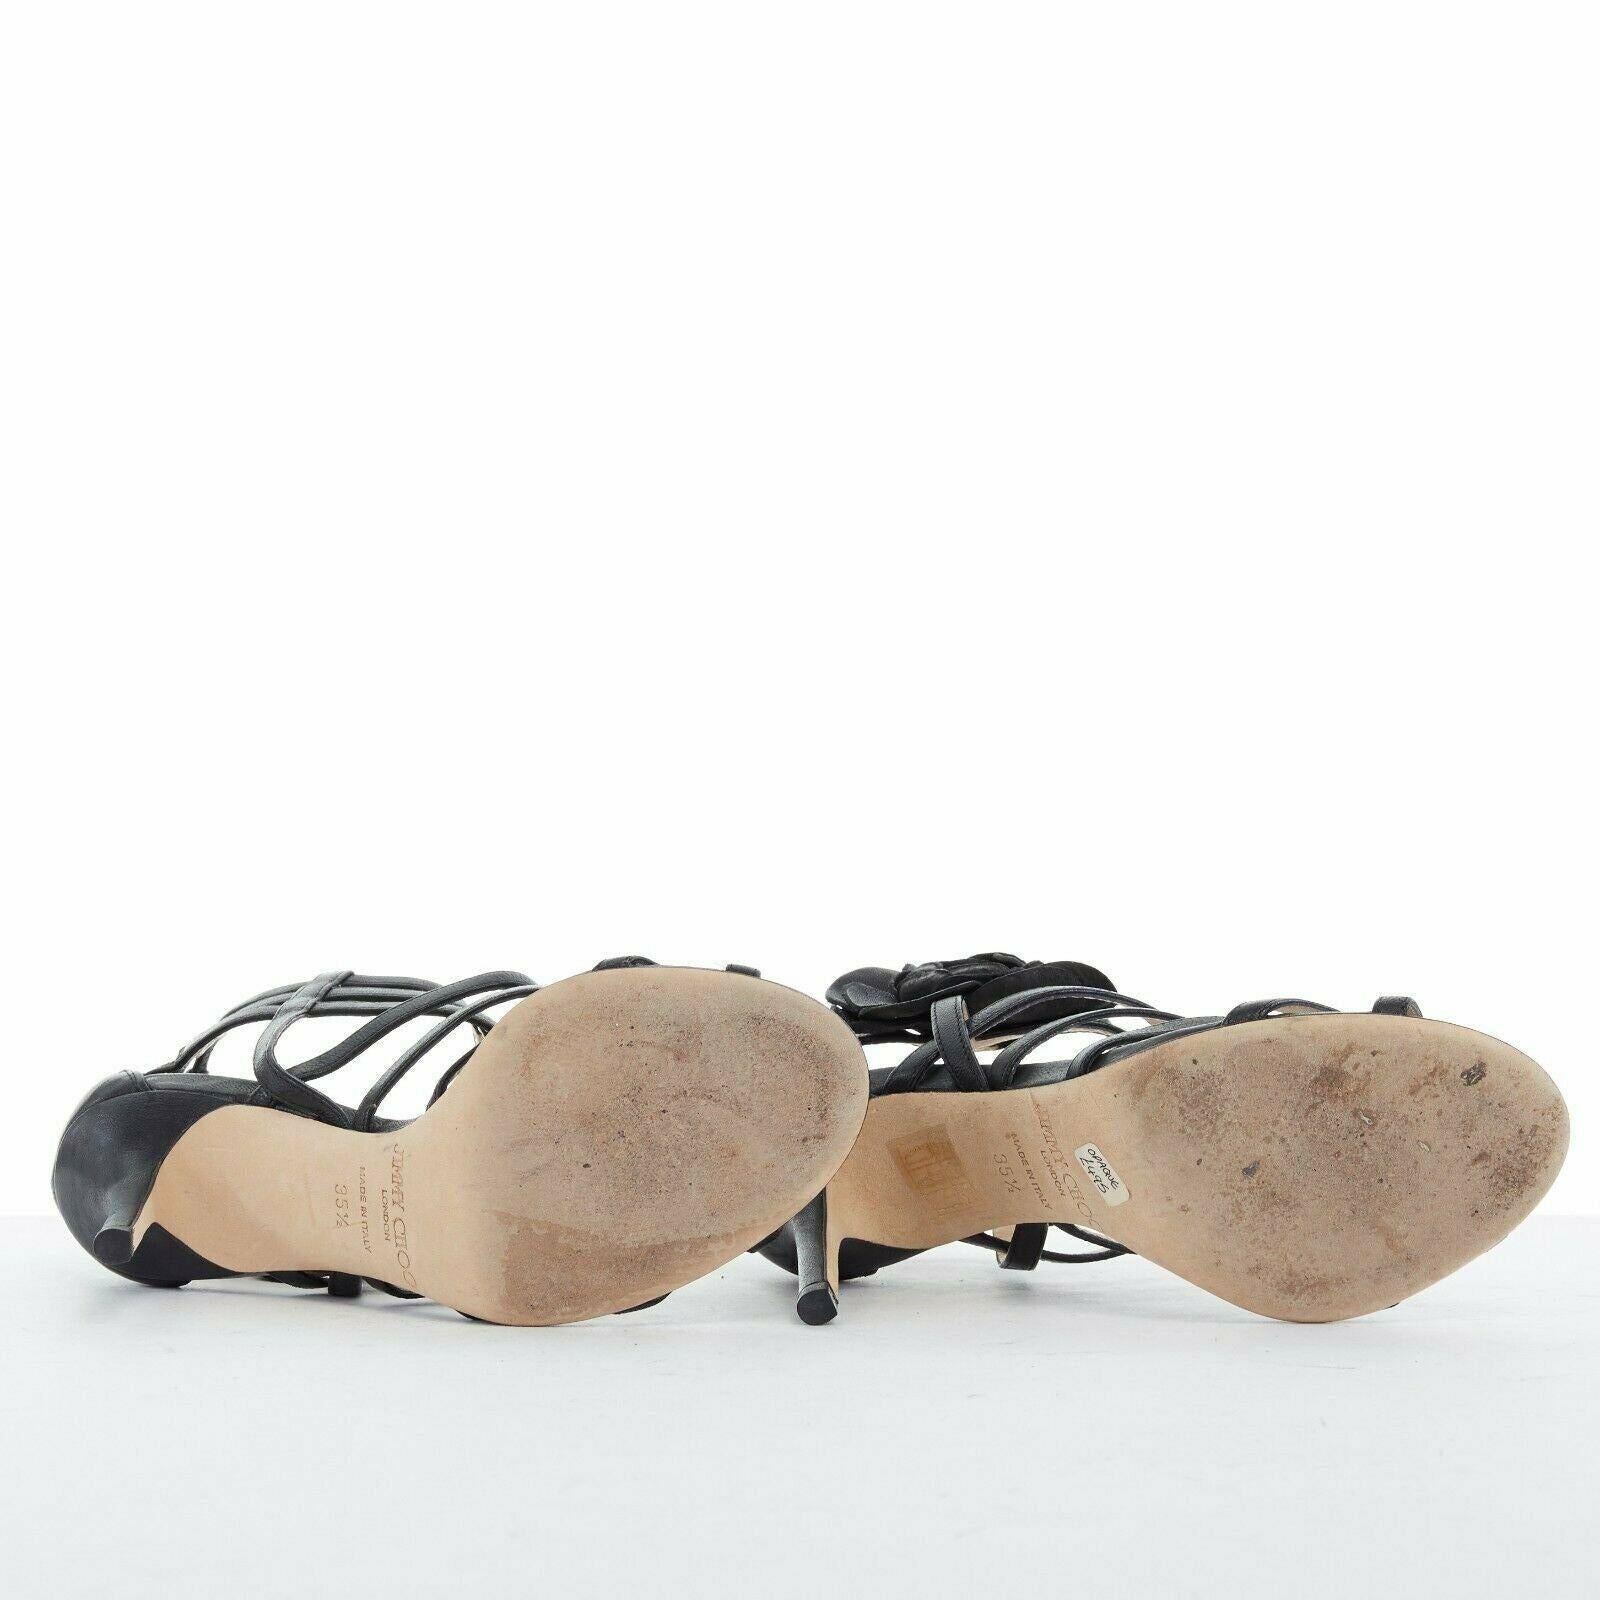 Black JIMMY CHOO black leather flower brooch caged strappy heel sandals EU35.5 US5.5